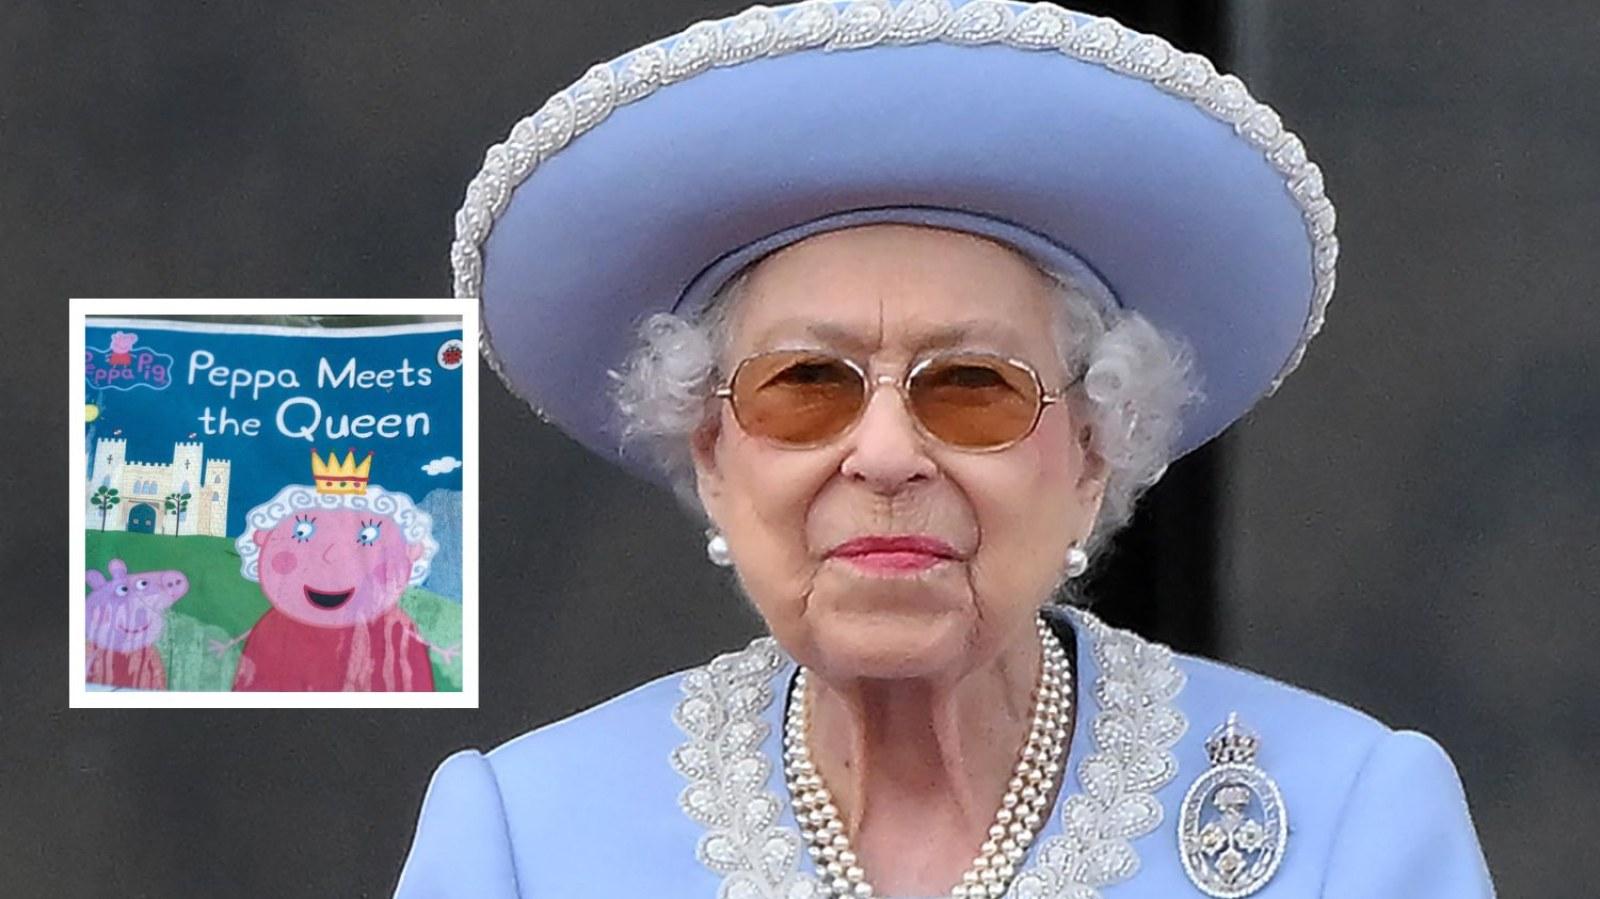 Queen Elizabeth Tribute In Peppa Pig Sparks Wild Reactions